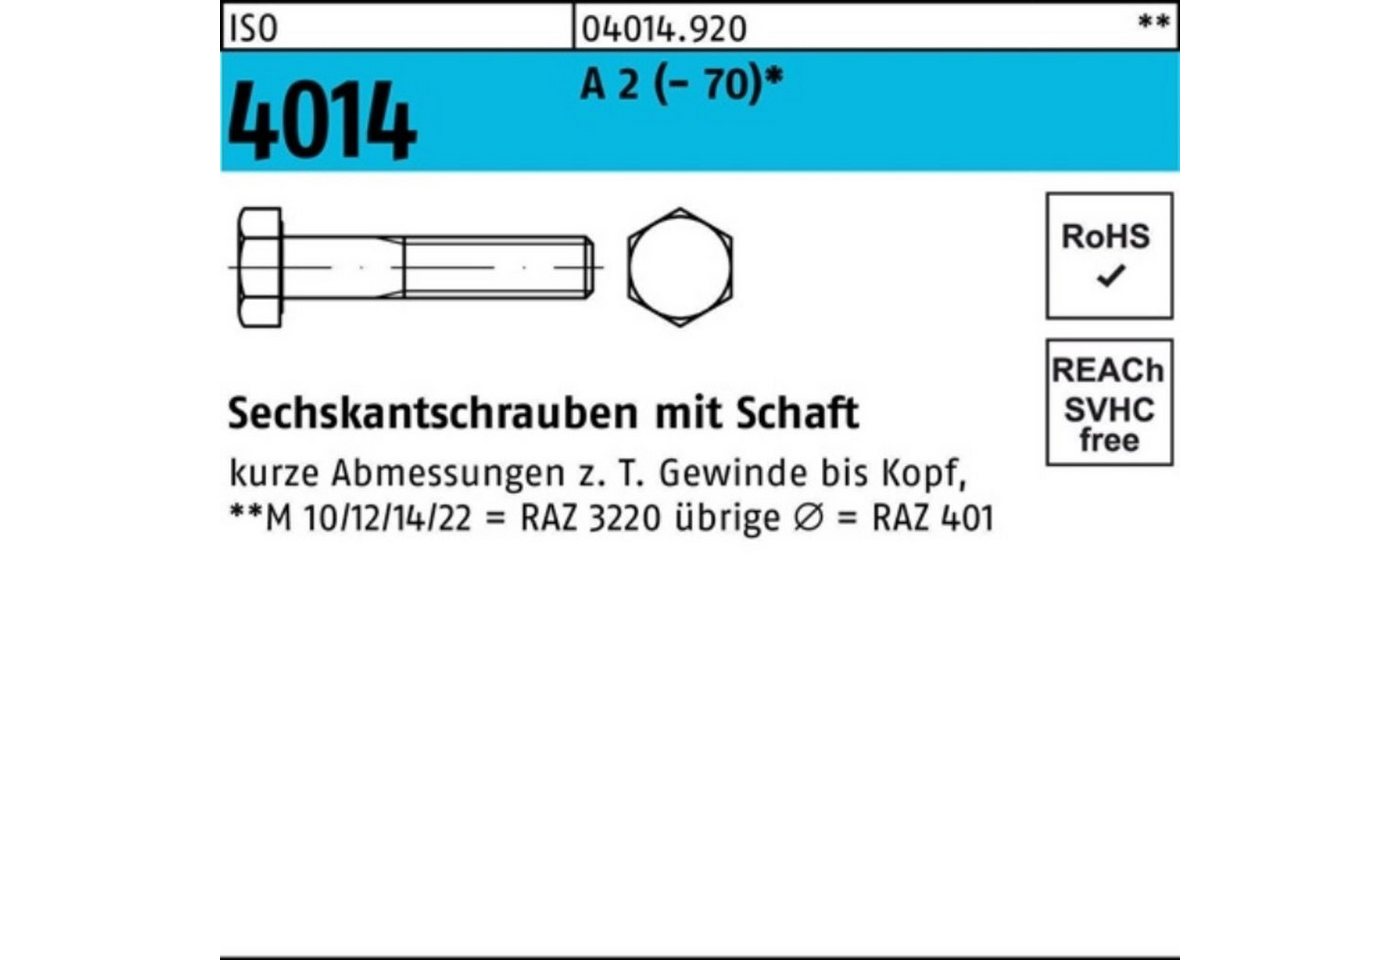 Bufab Sechskantschraube 100er Pack Sechskantschraube ISO 4014 Schaft M20x 100 A 2 (70) 1 St von Bufab